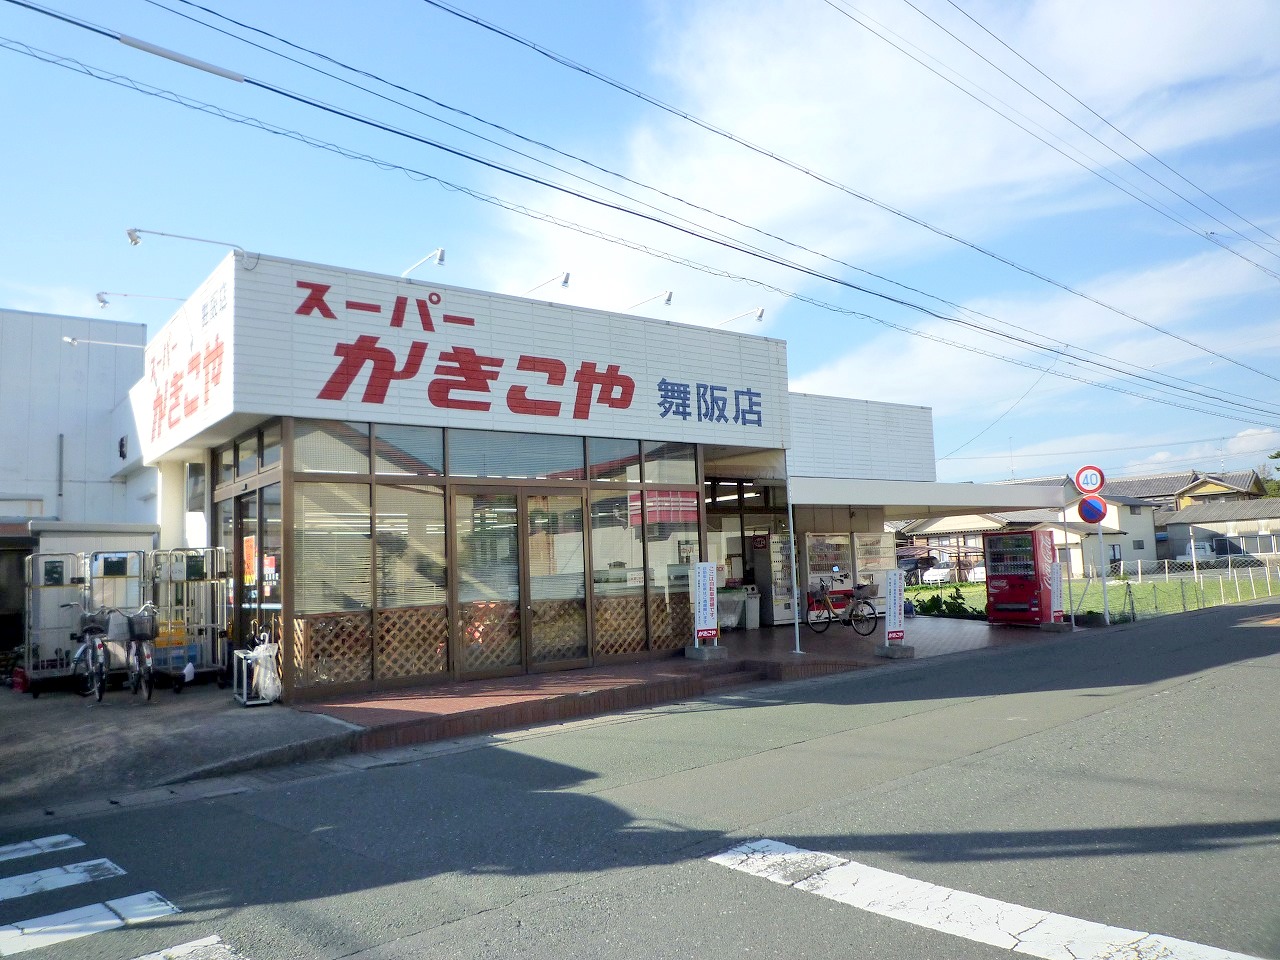 Supermarket. Kakiko and Maisaka store up to (super) 774m